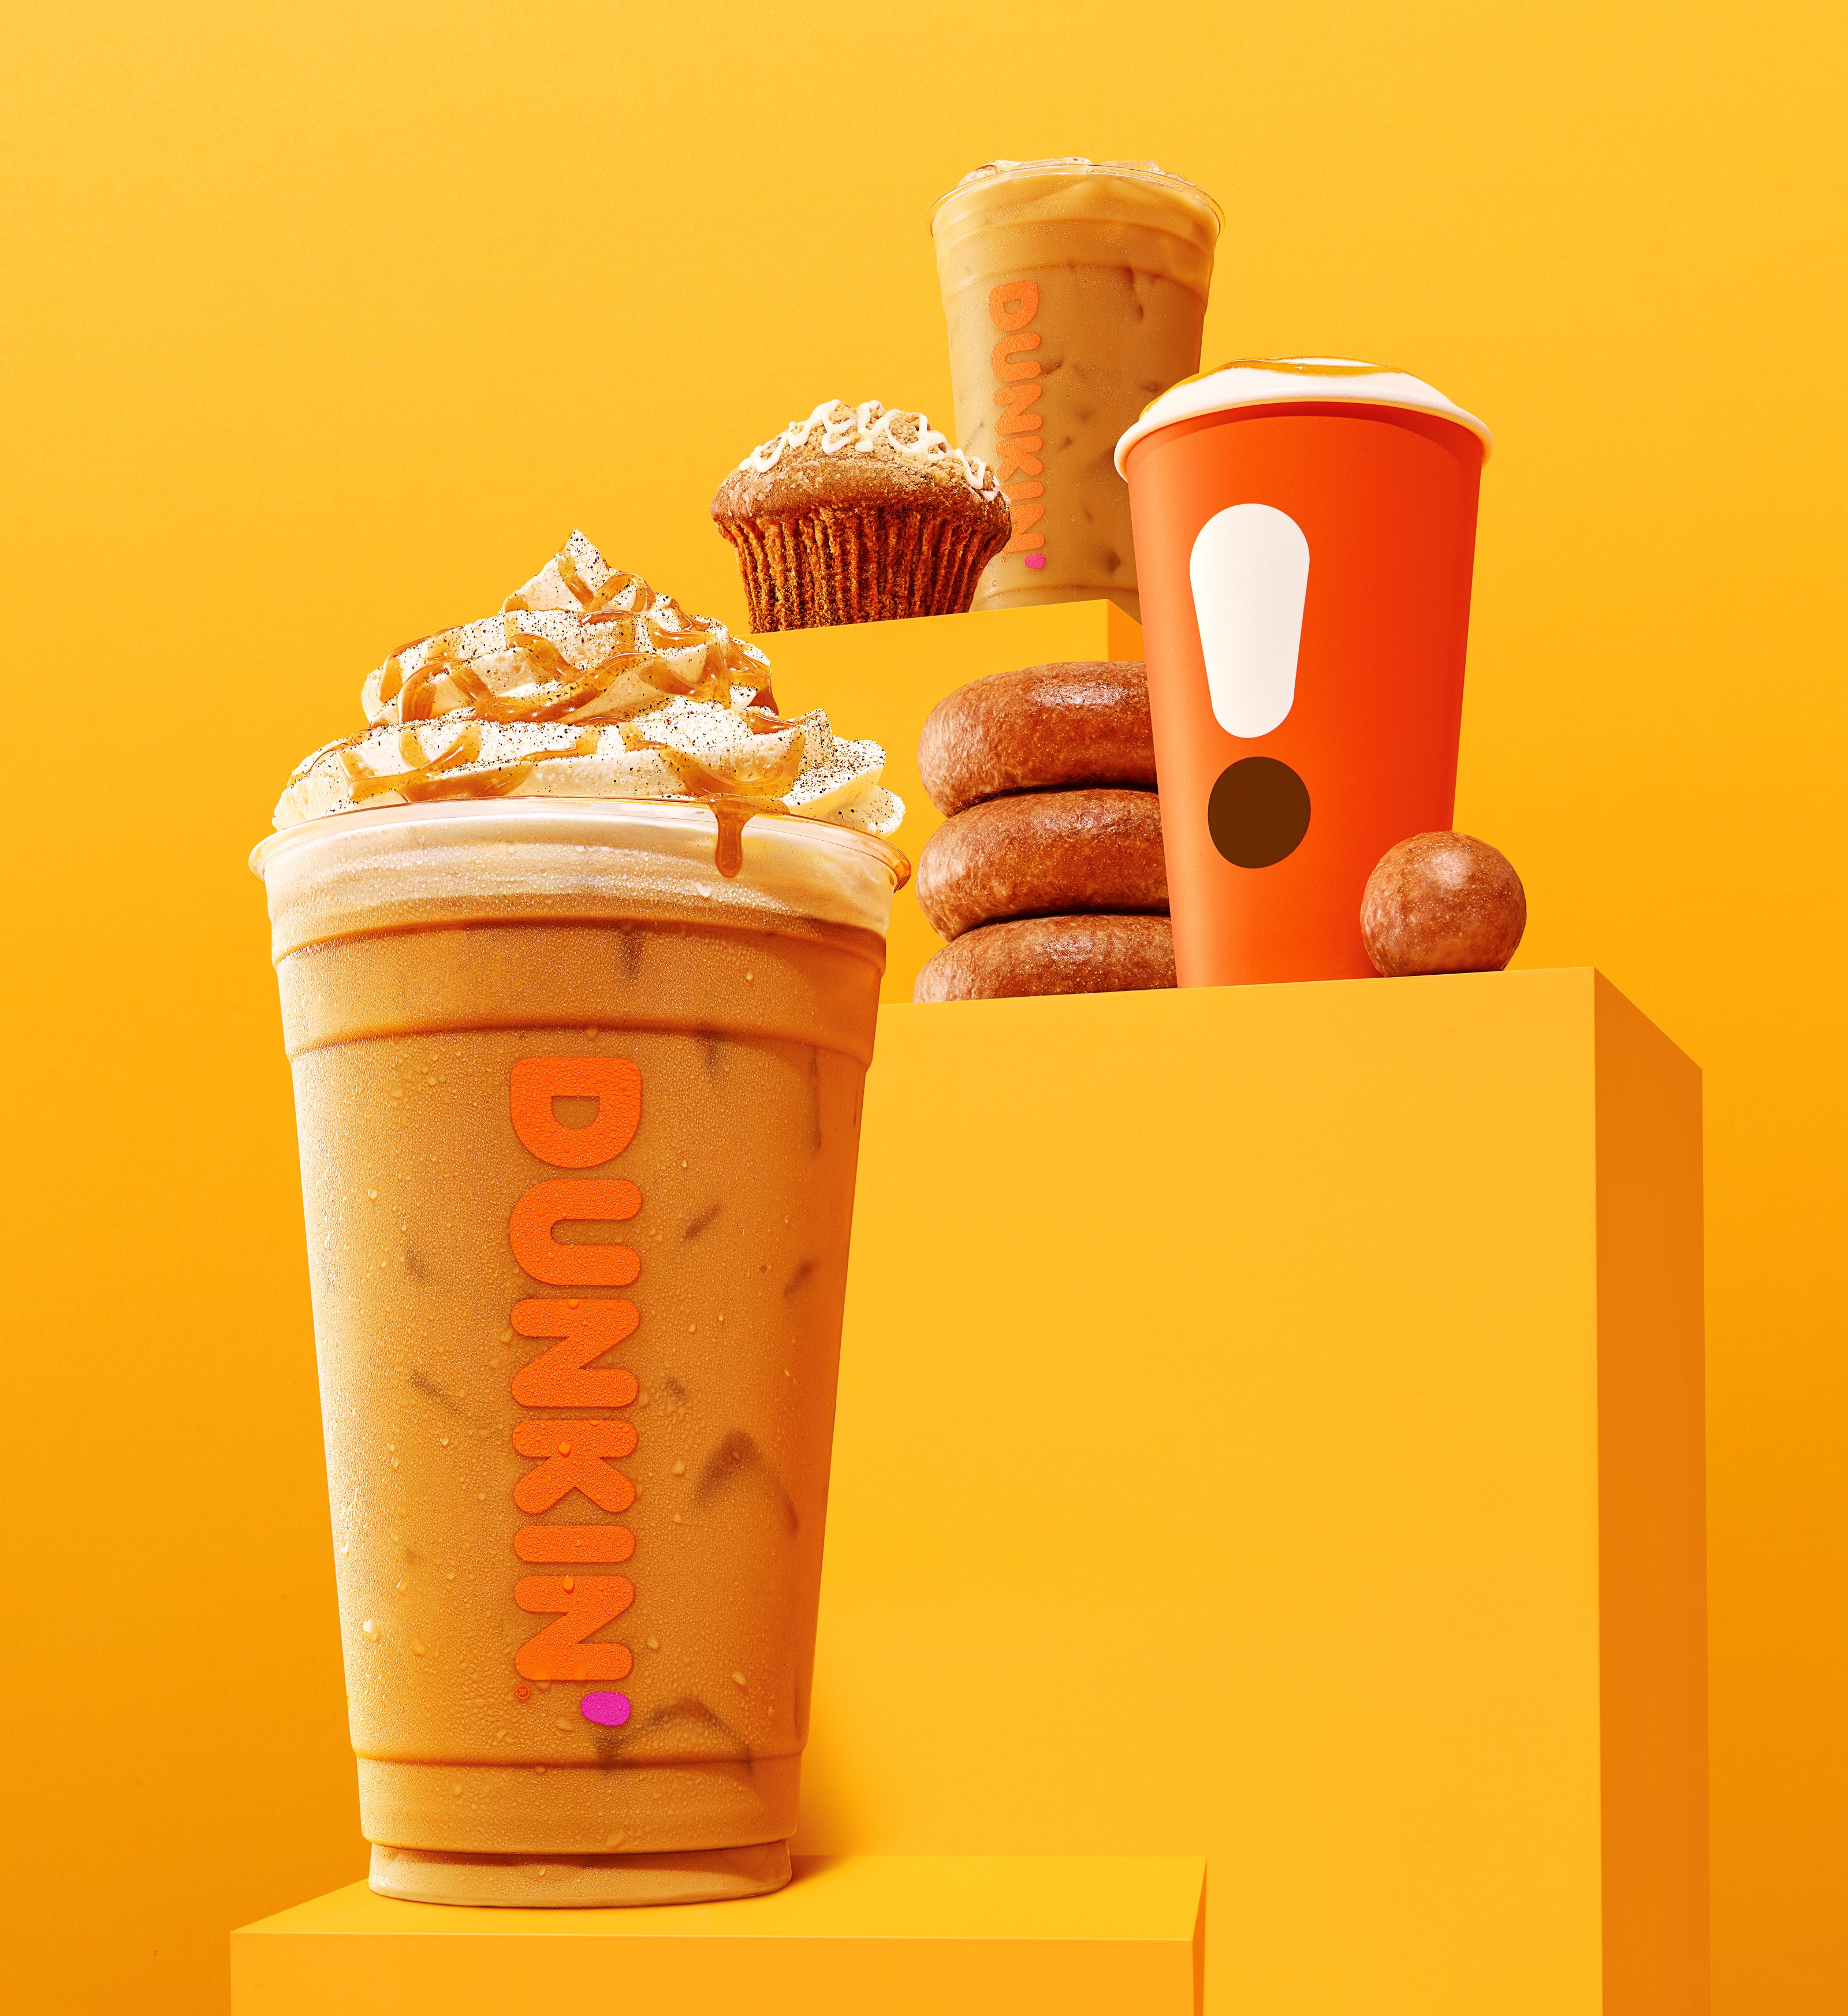 Dunkin' to Rebrand 8 Stores as 'Pumpkin' to Celebrate New Fall Menu